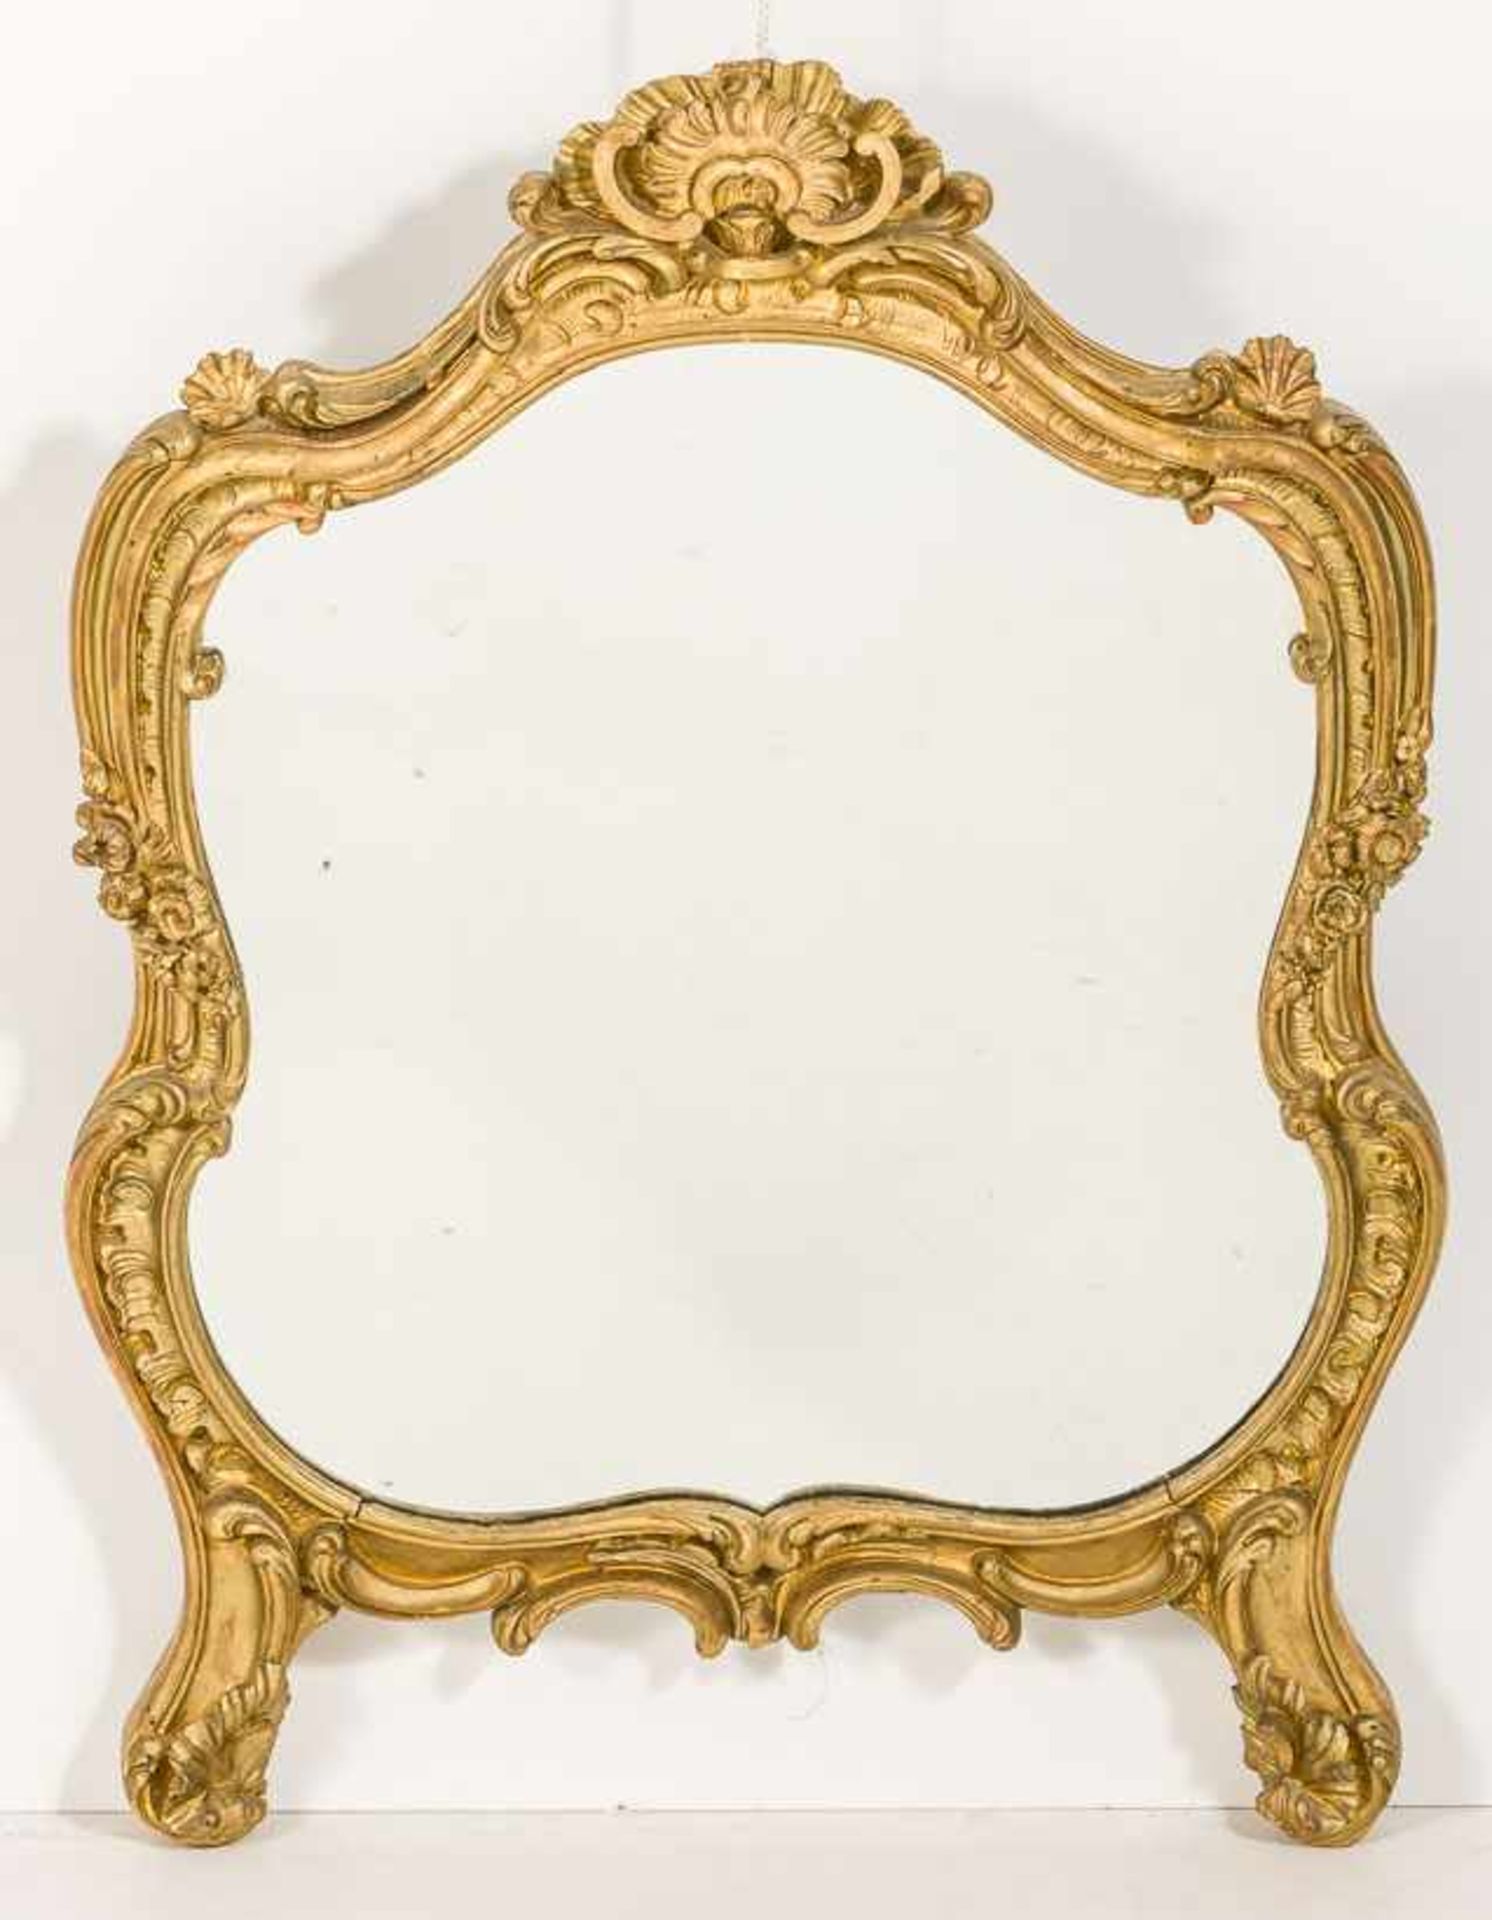 Kartuschenspiegel im RokokostilHolz, geschnitzt, goldbronziert. Rocaille-, Blatt- u. Blütendekor.